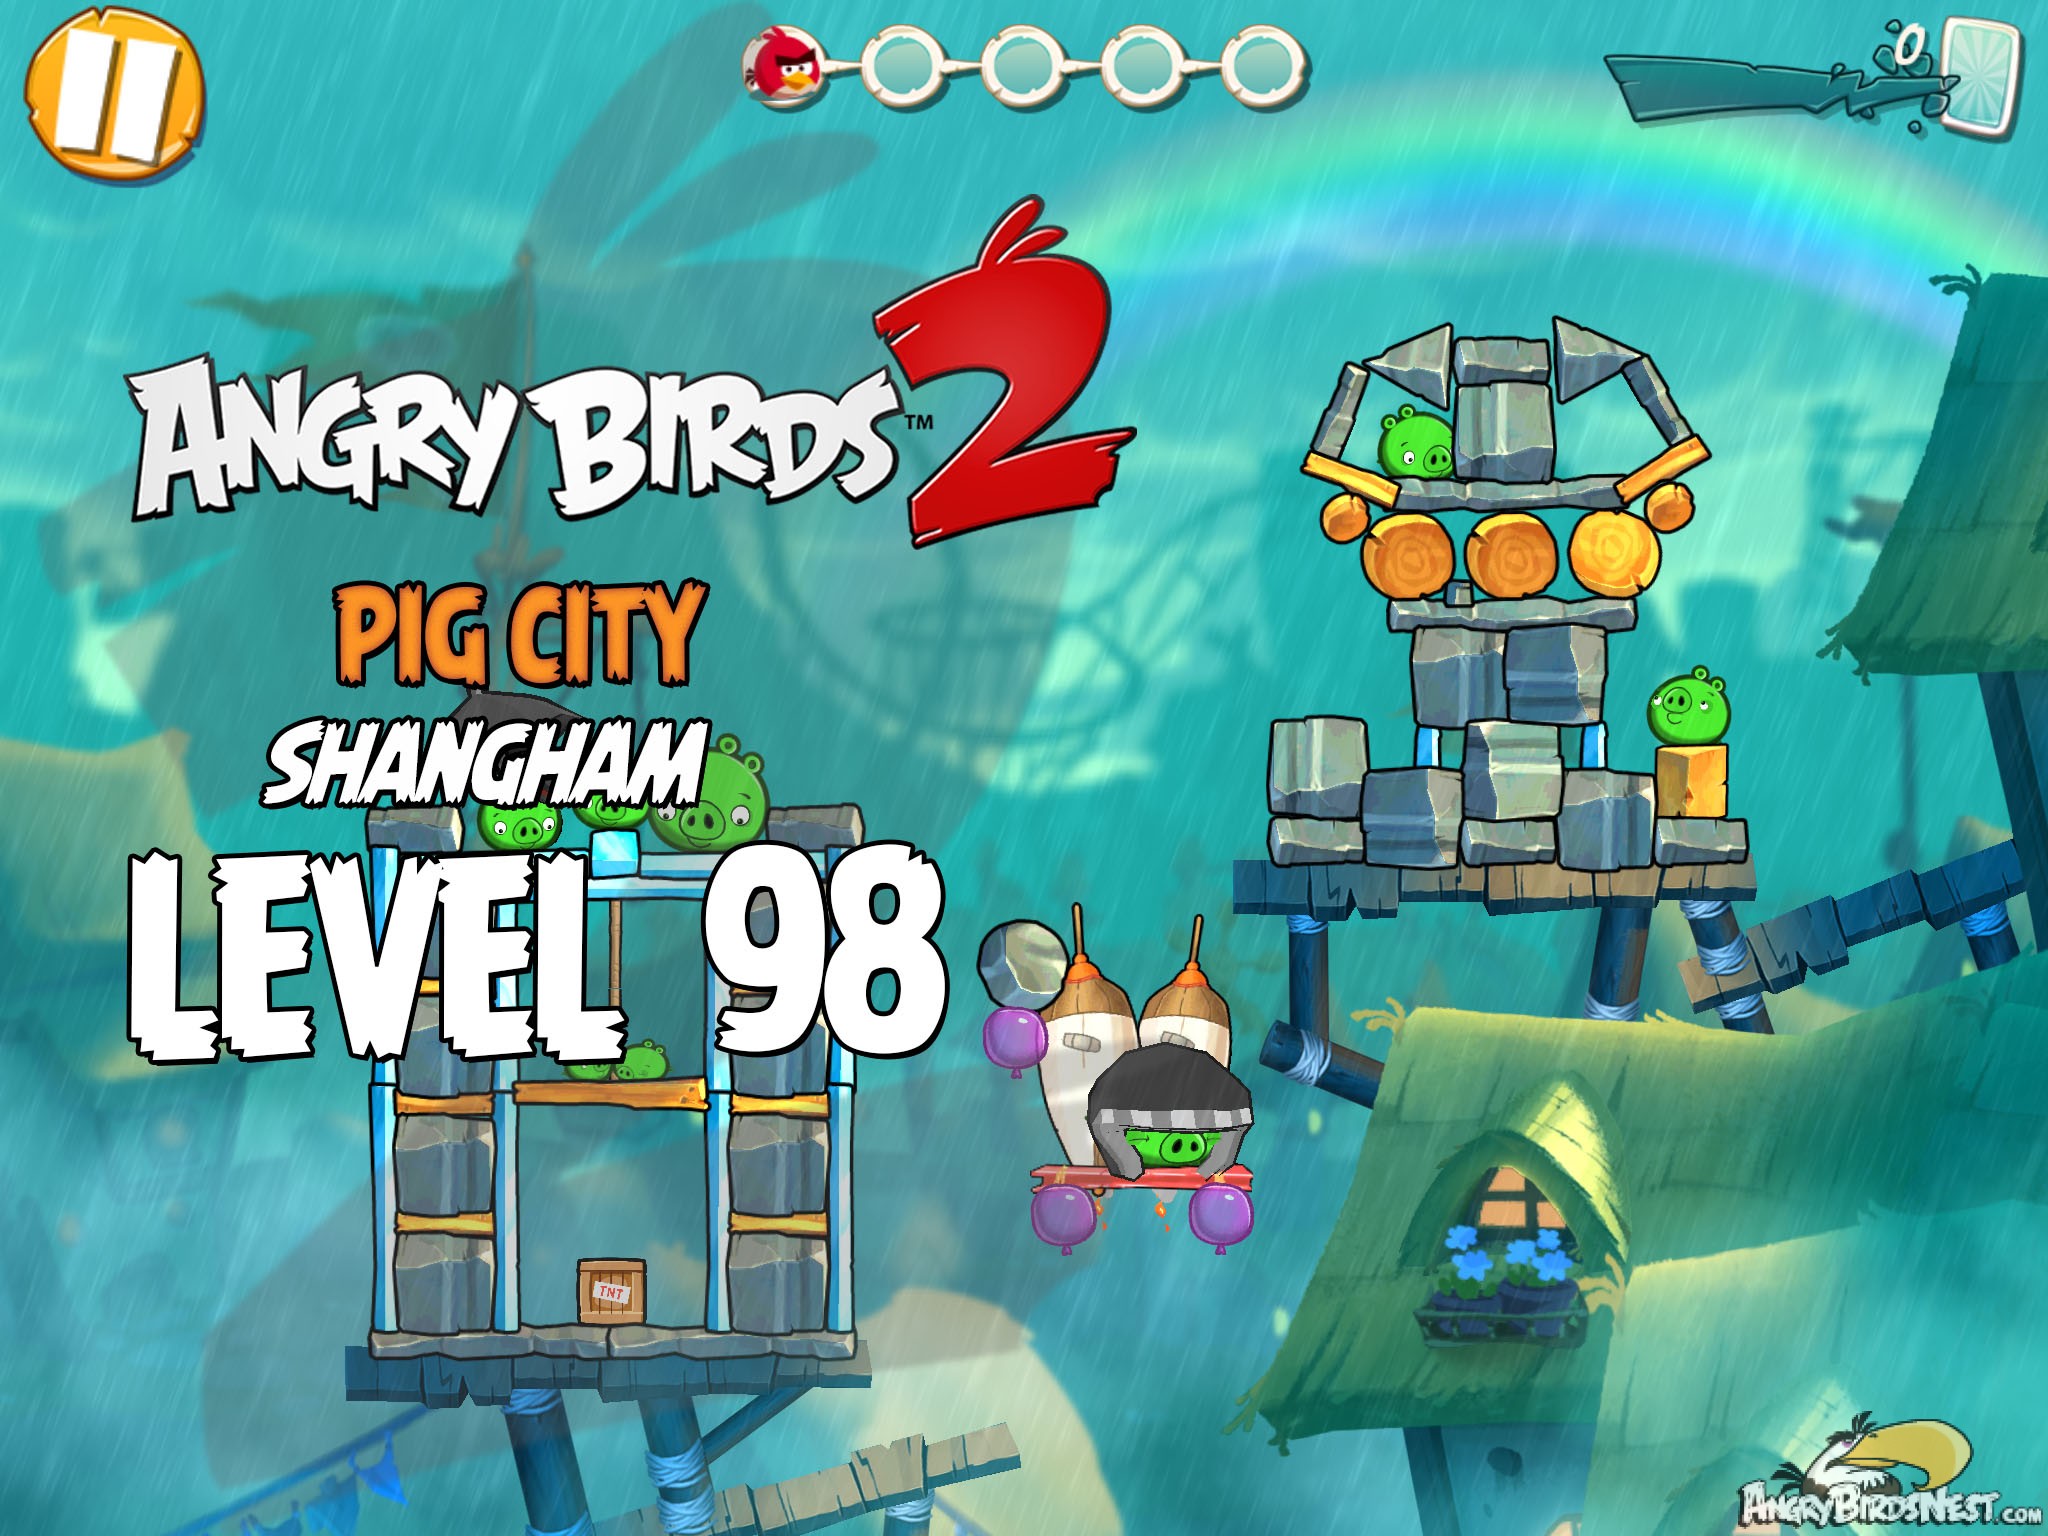 Angry Birds 2 Pig City Shangham Level 98